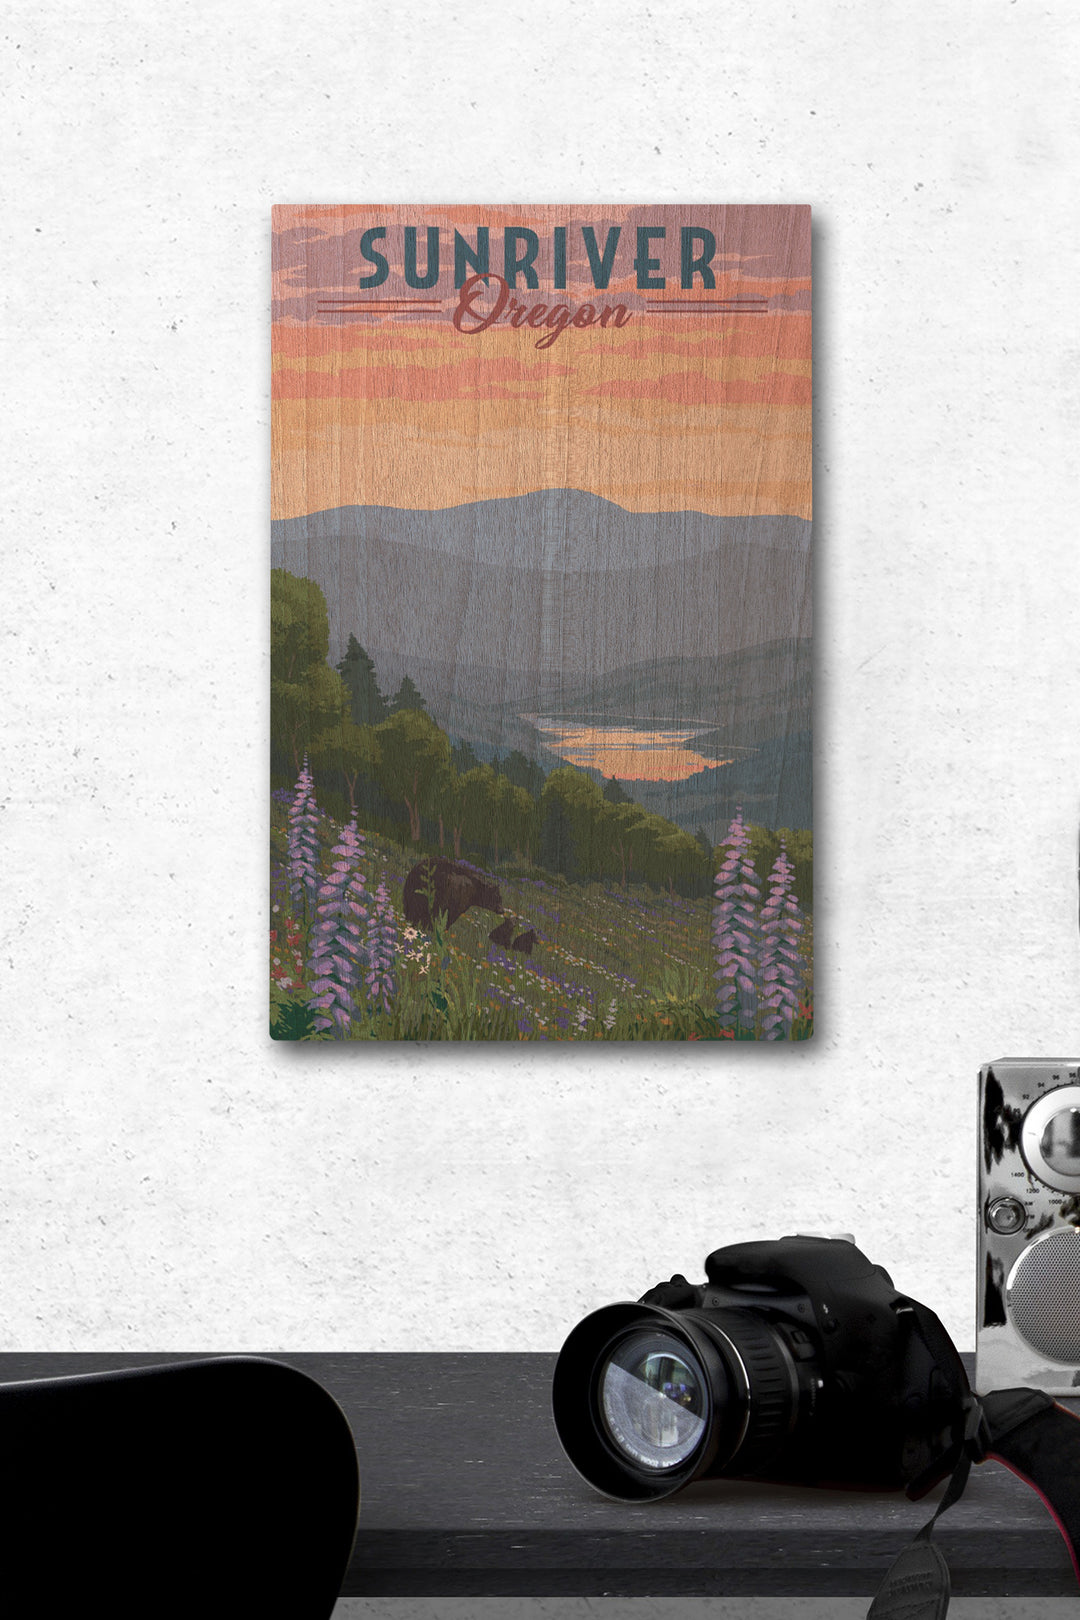 Sunriver, Oregon, Bear and Spring Flowers, Lantern Press Artwork, Wood Signs and Postcards